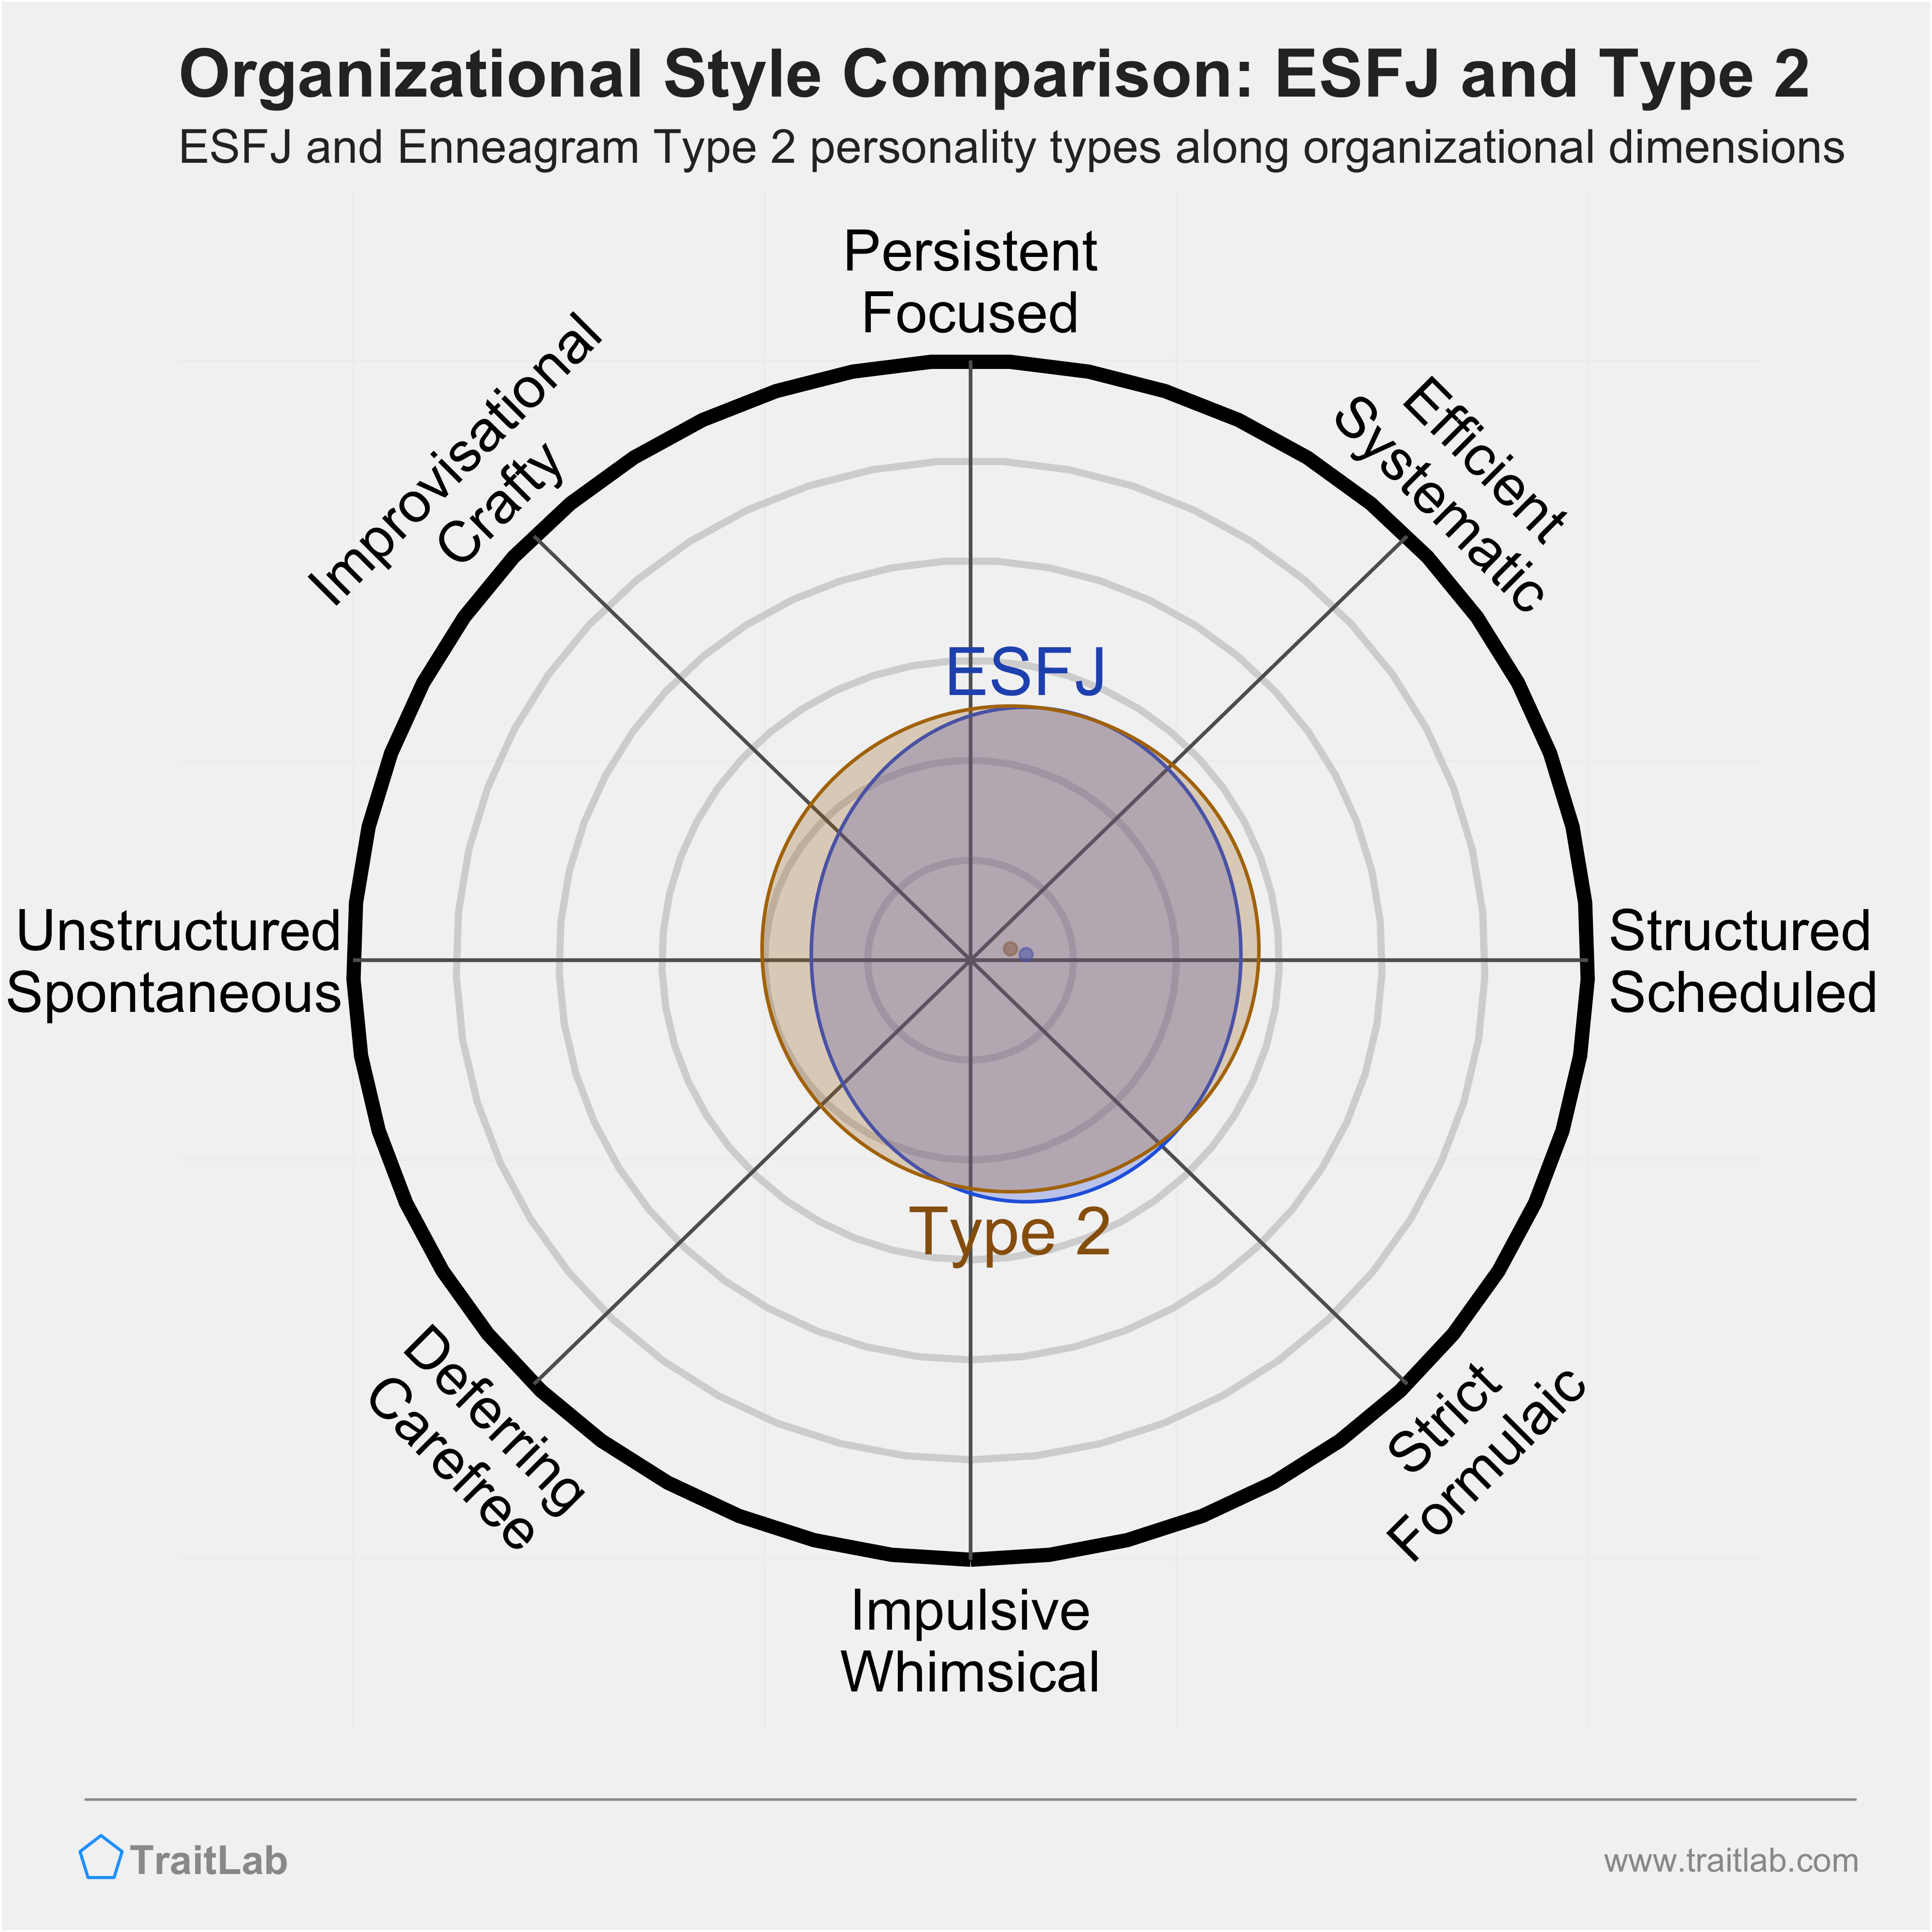 ESFJ and Type 2 comparison across organizational dimensions